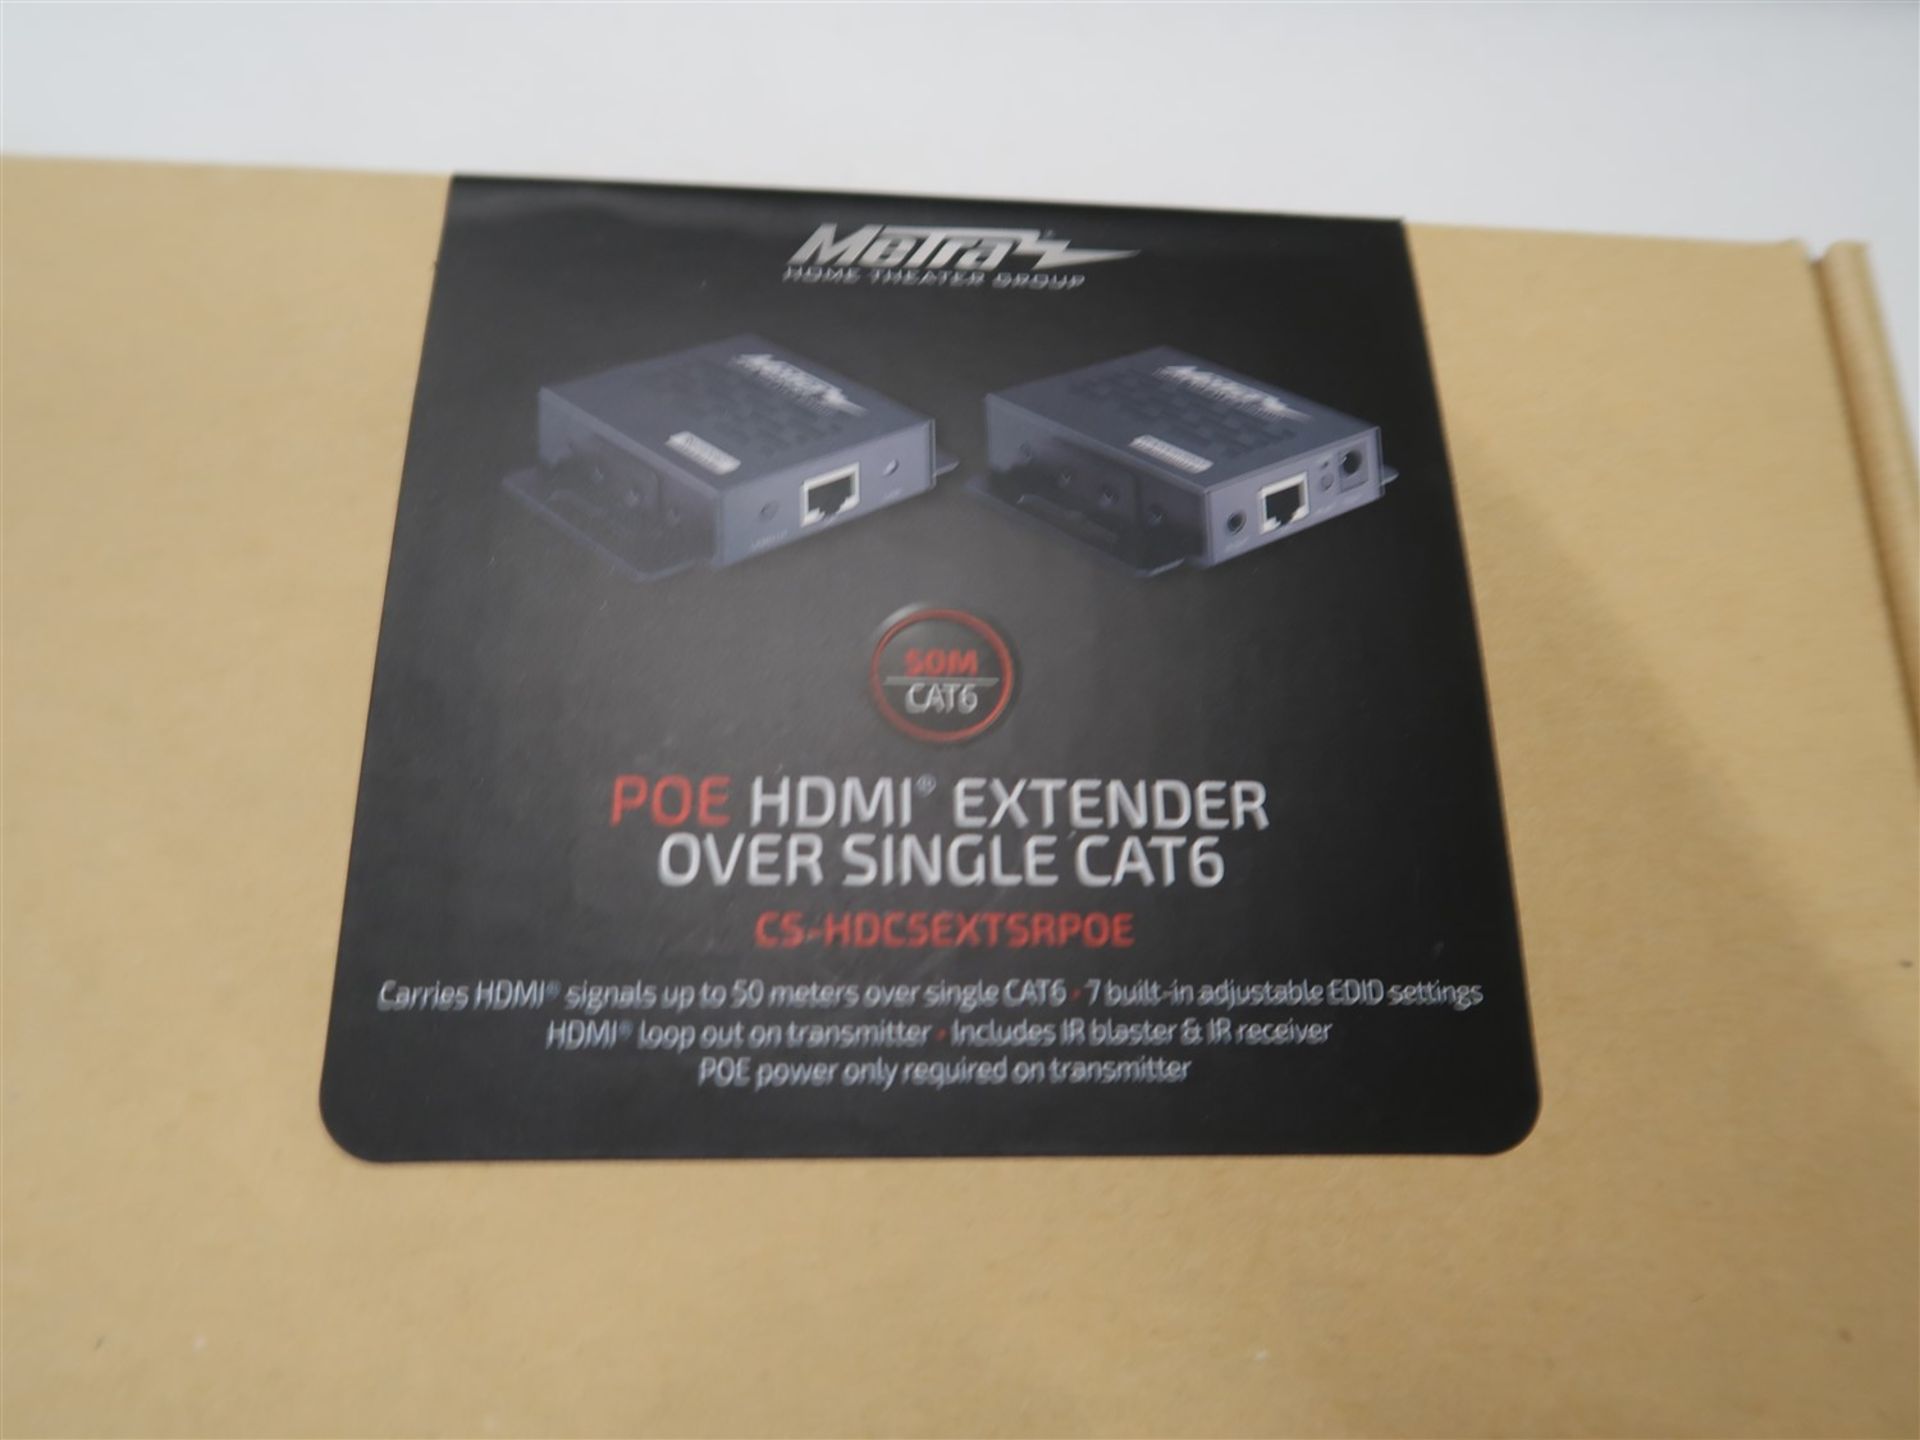 METRA POE HDMI EXTENDER OVER SINGLE CAT 6 CS-HOC5EXTSRPOE (BNIB) - Image 2 of 2